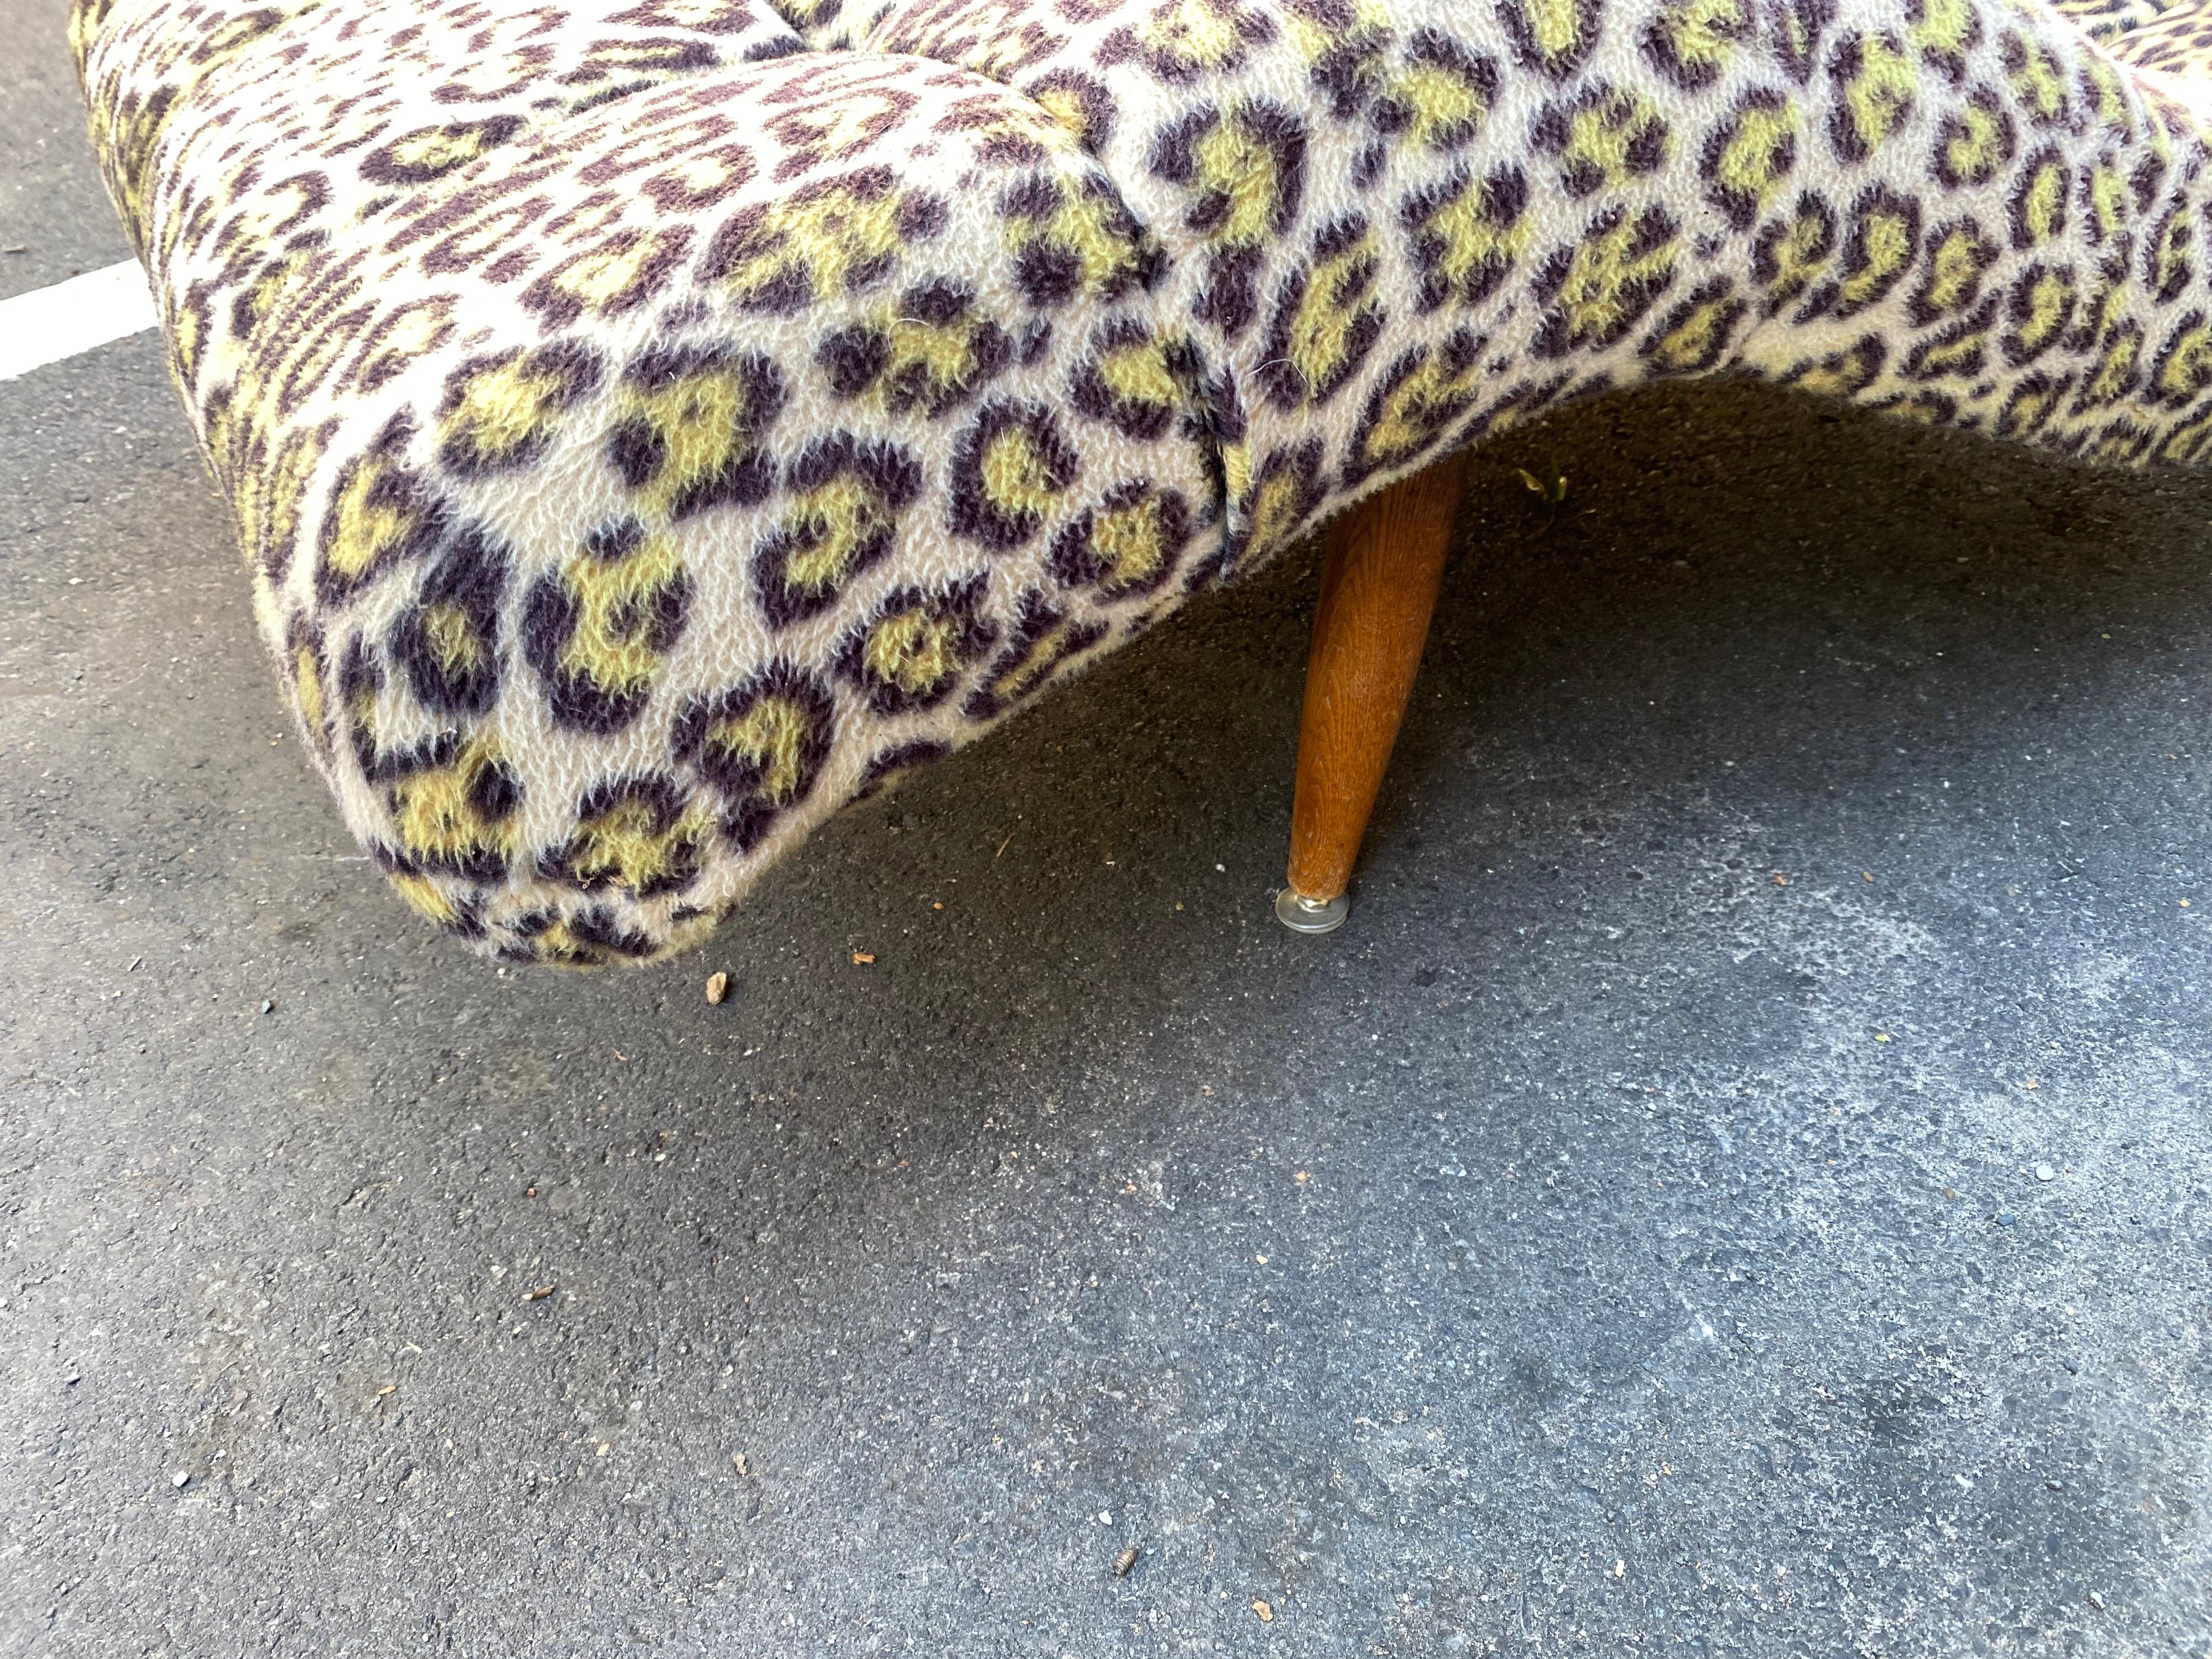 leopard print chaise lounge